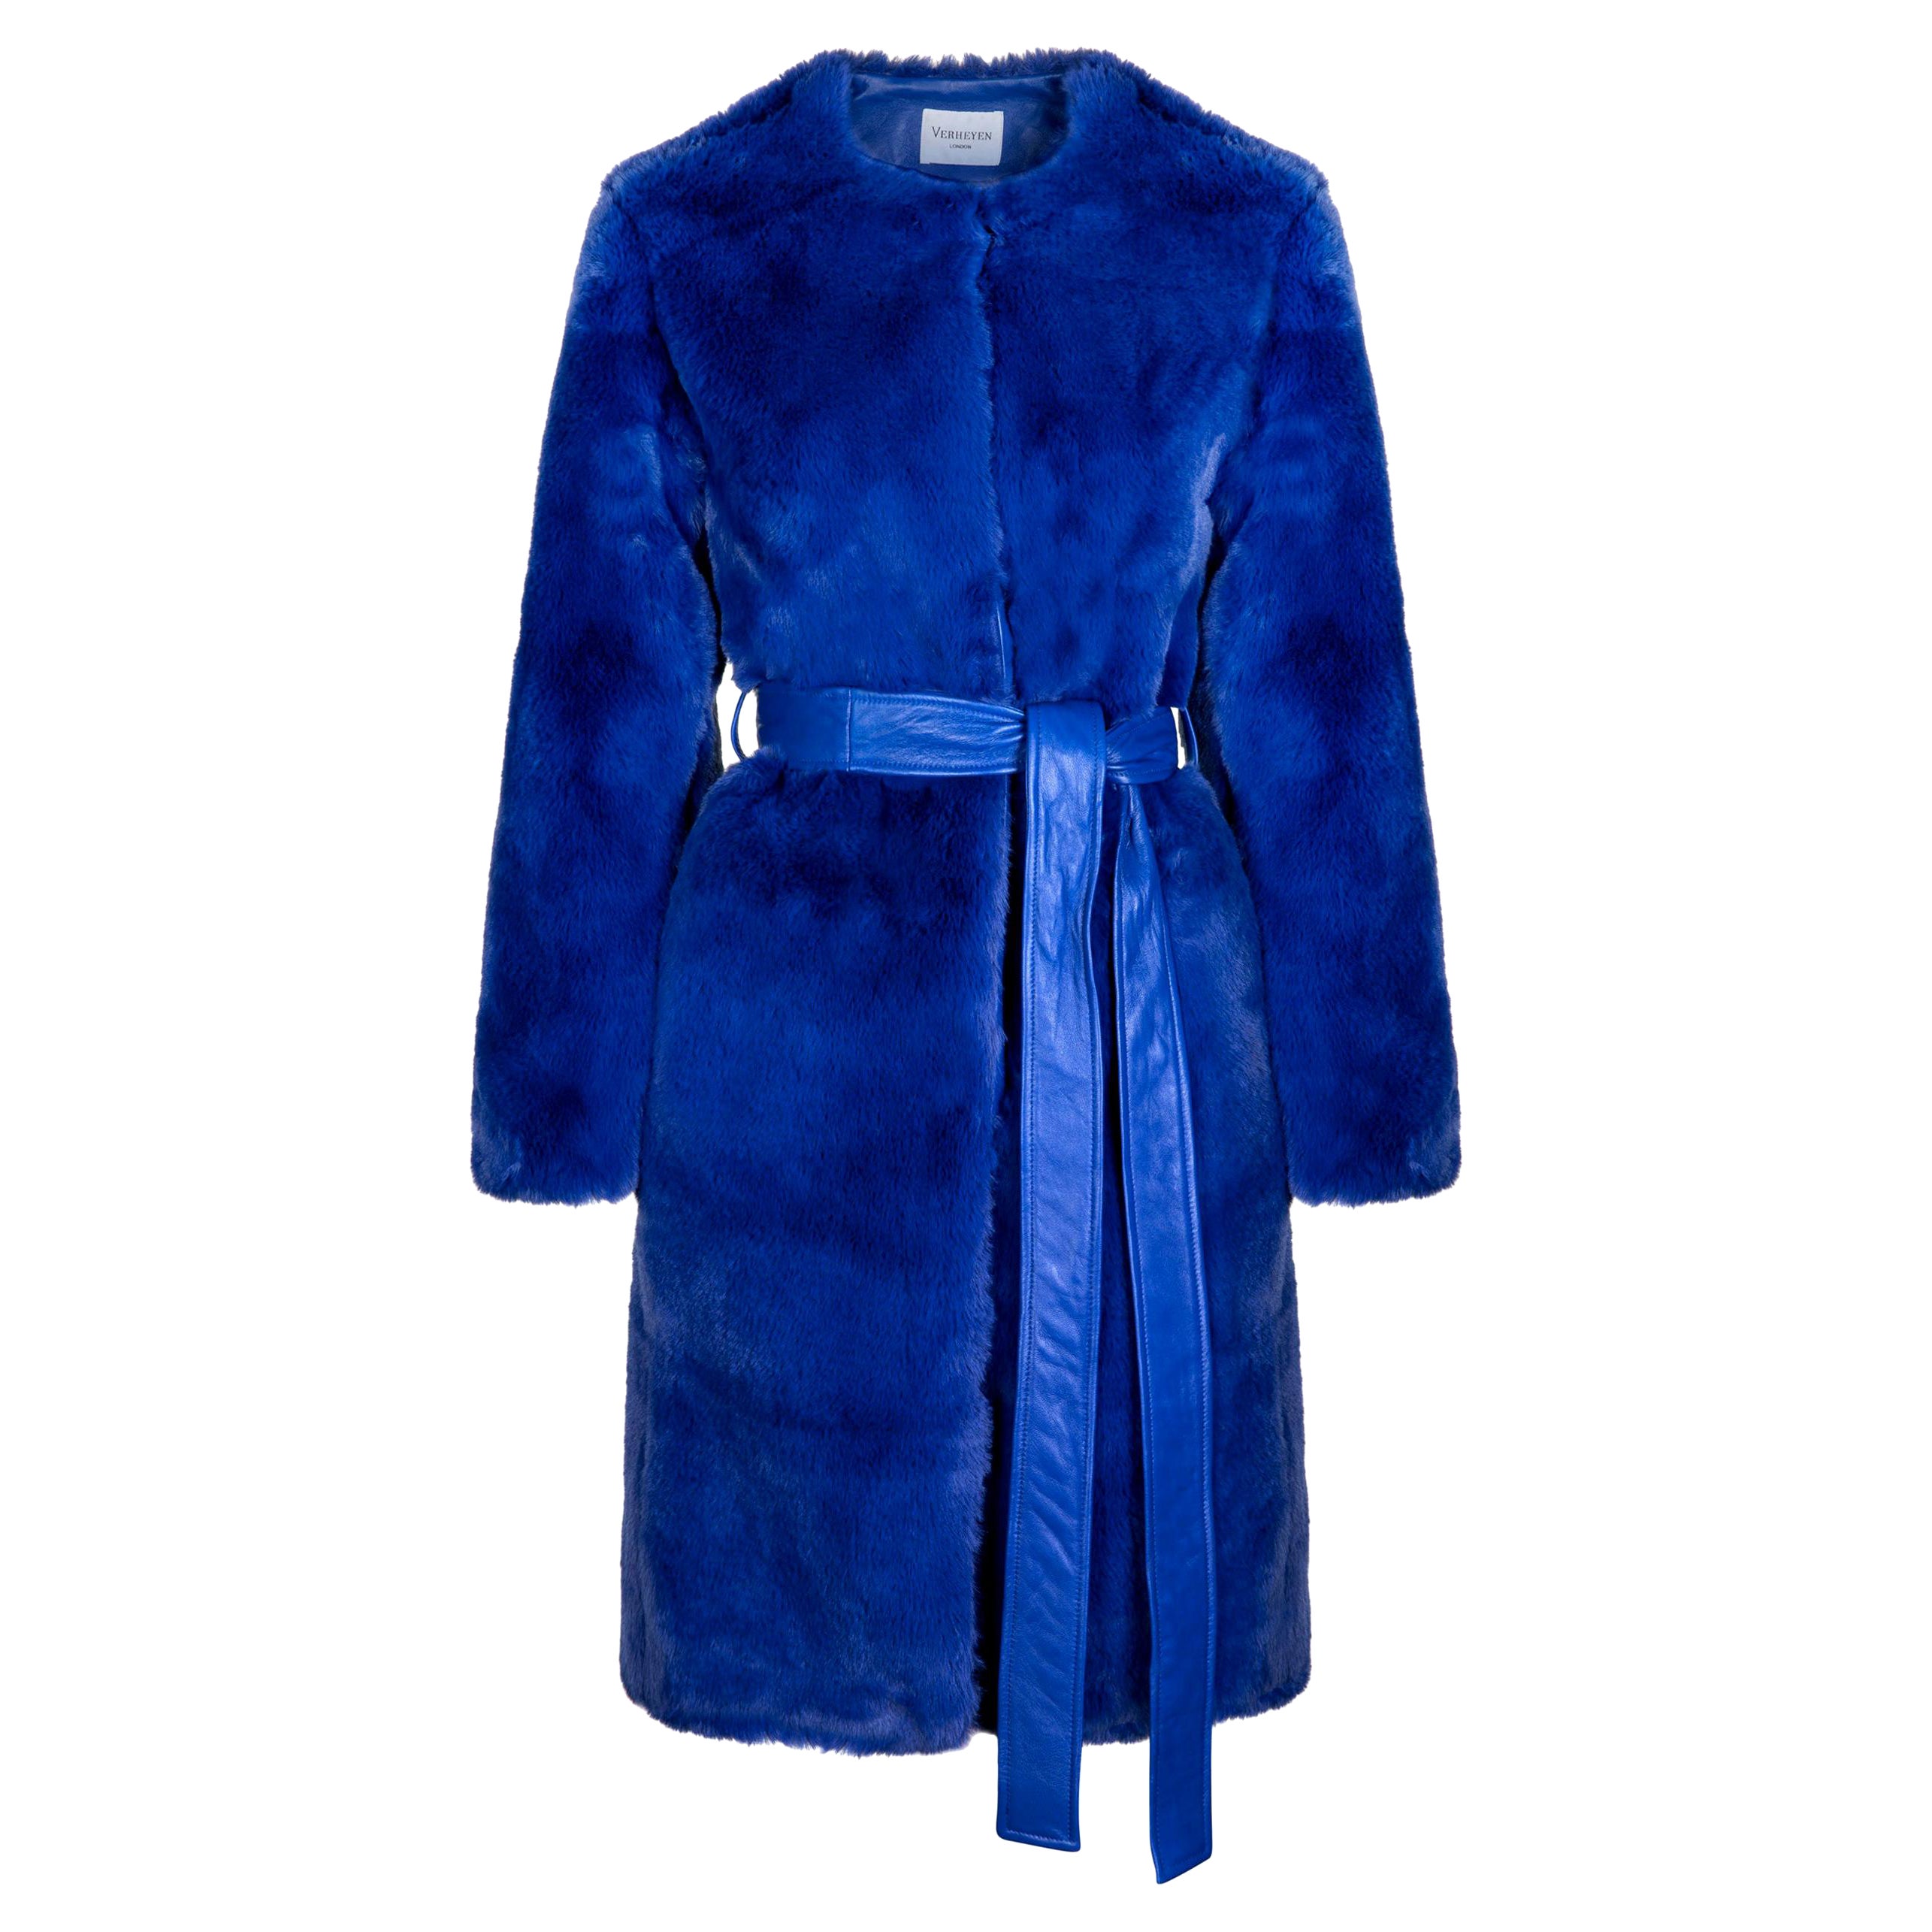 Verheyen London Serena  Collarless Faux Fur Coat in Blue - Size uk 8  For Sale